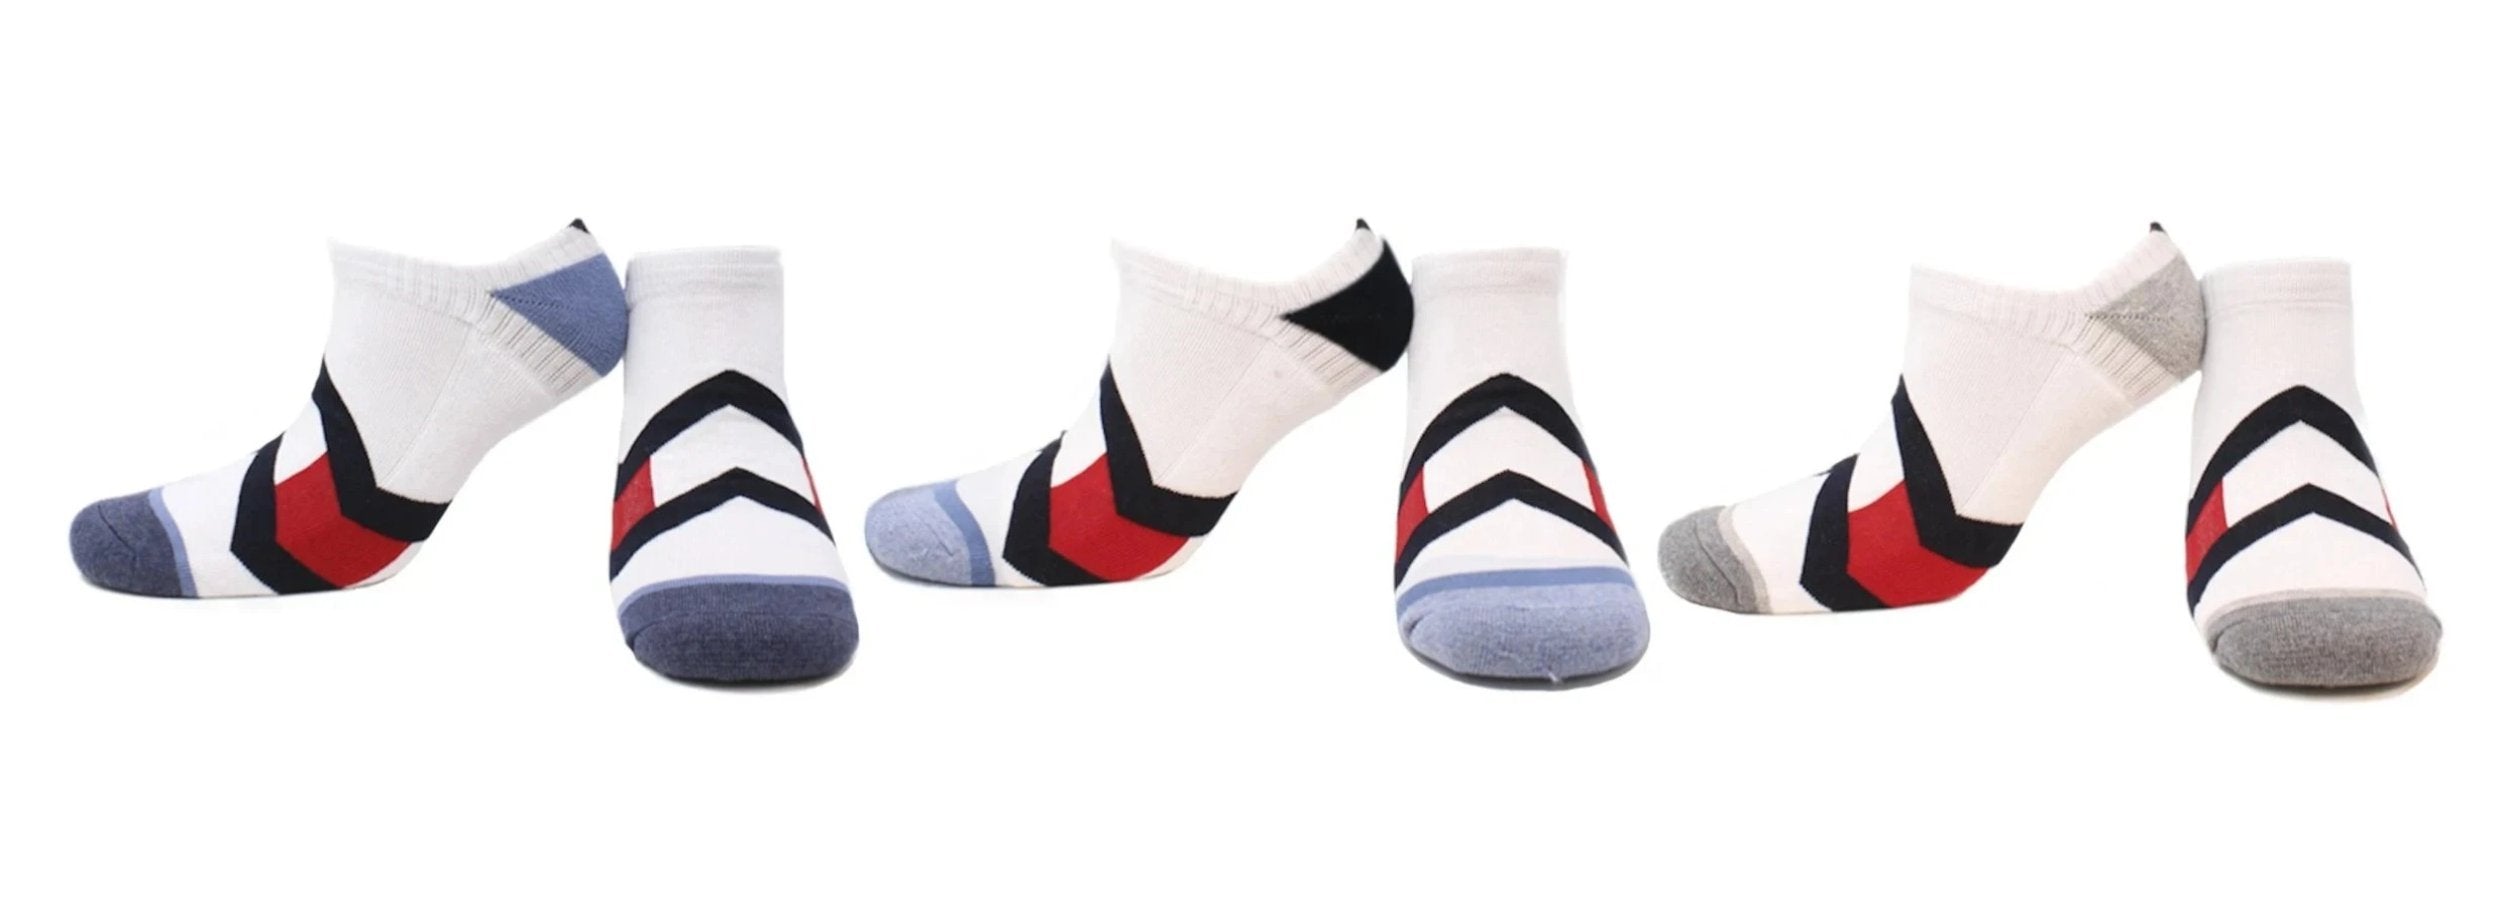 Chaussettes Adidas Homme : Nouvelle collection